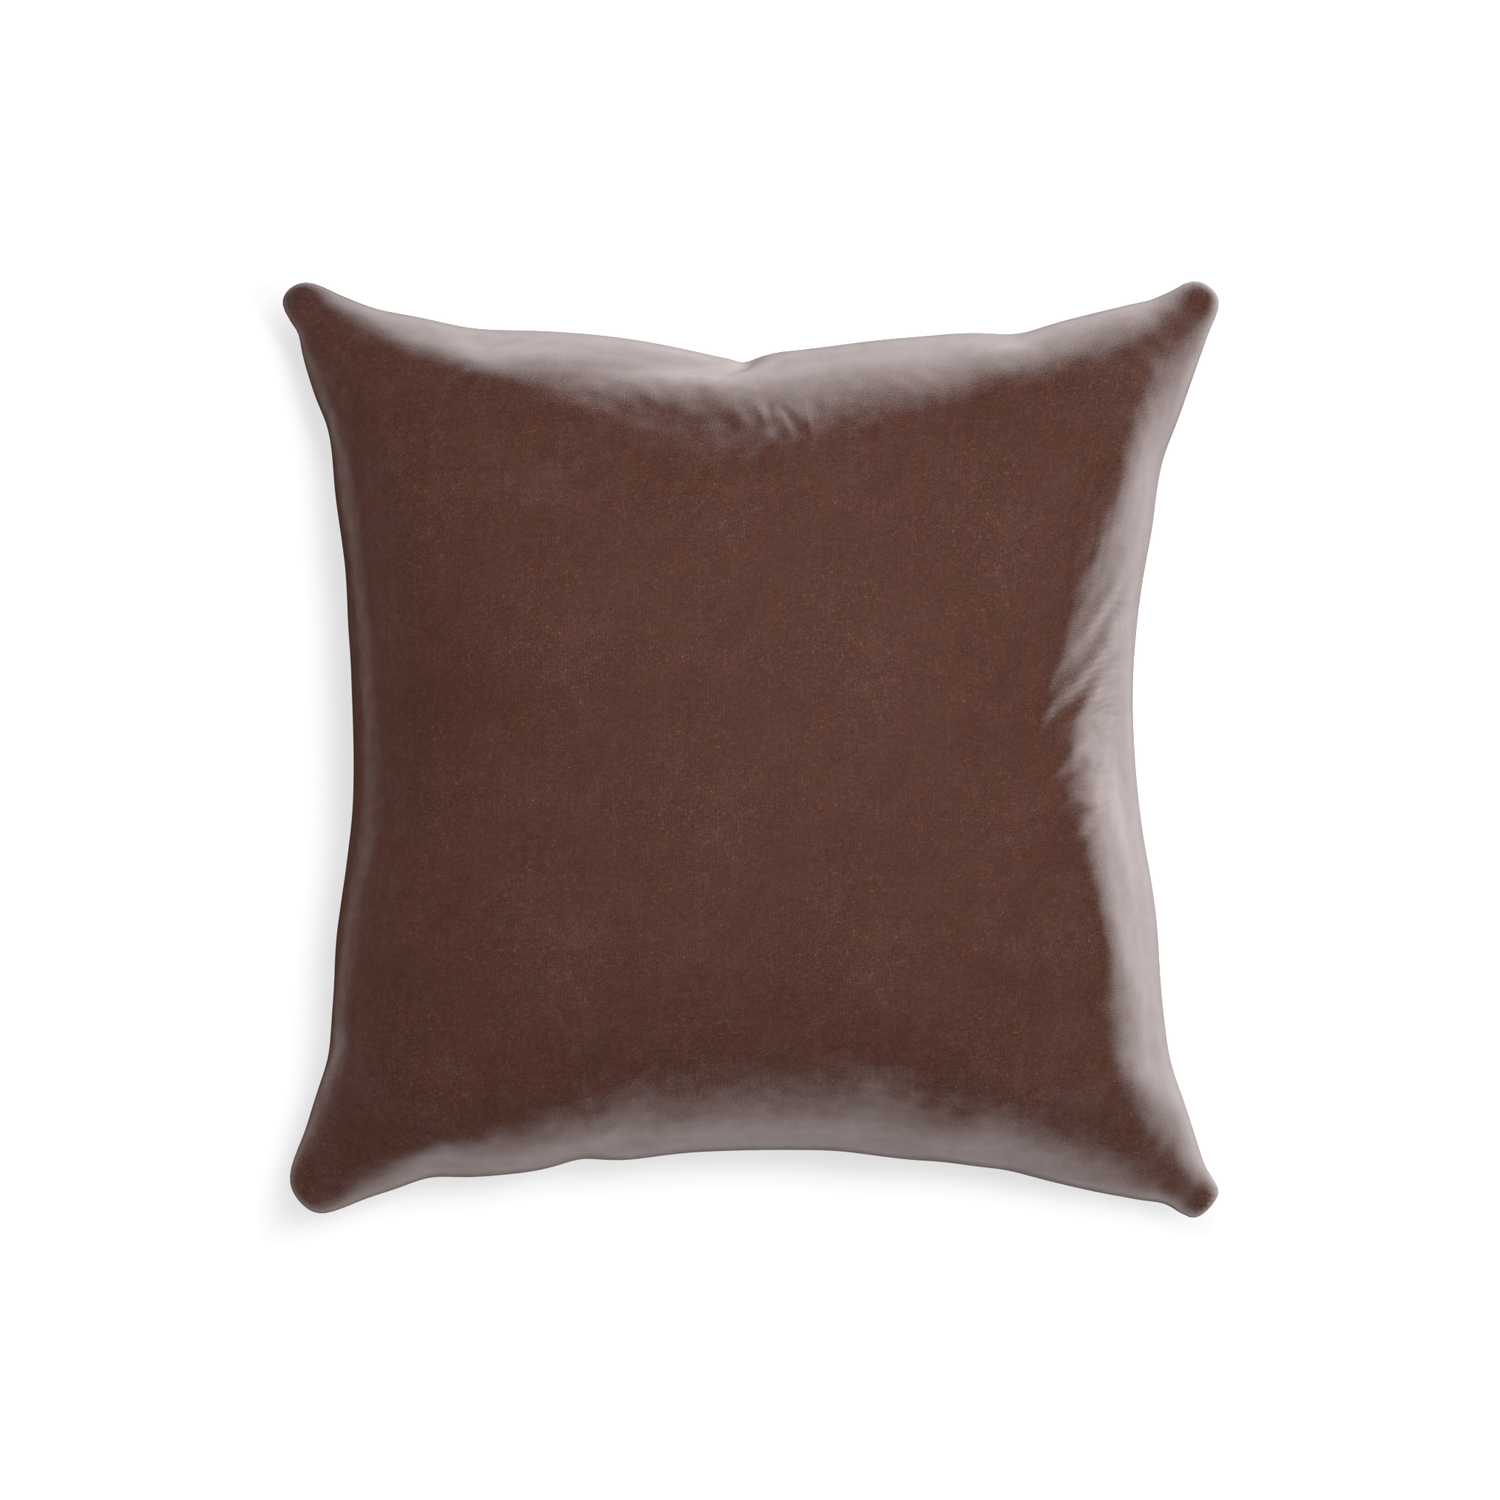 20-square walnut velvet custom pillow with none on white background